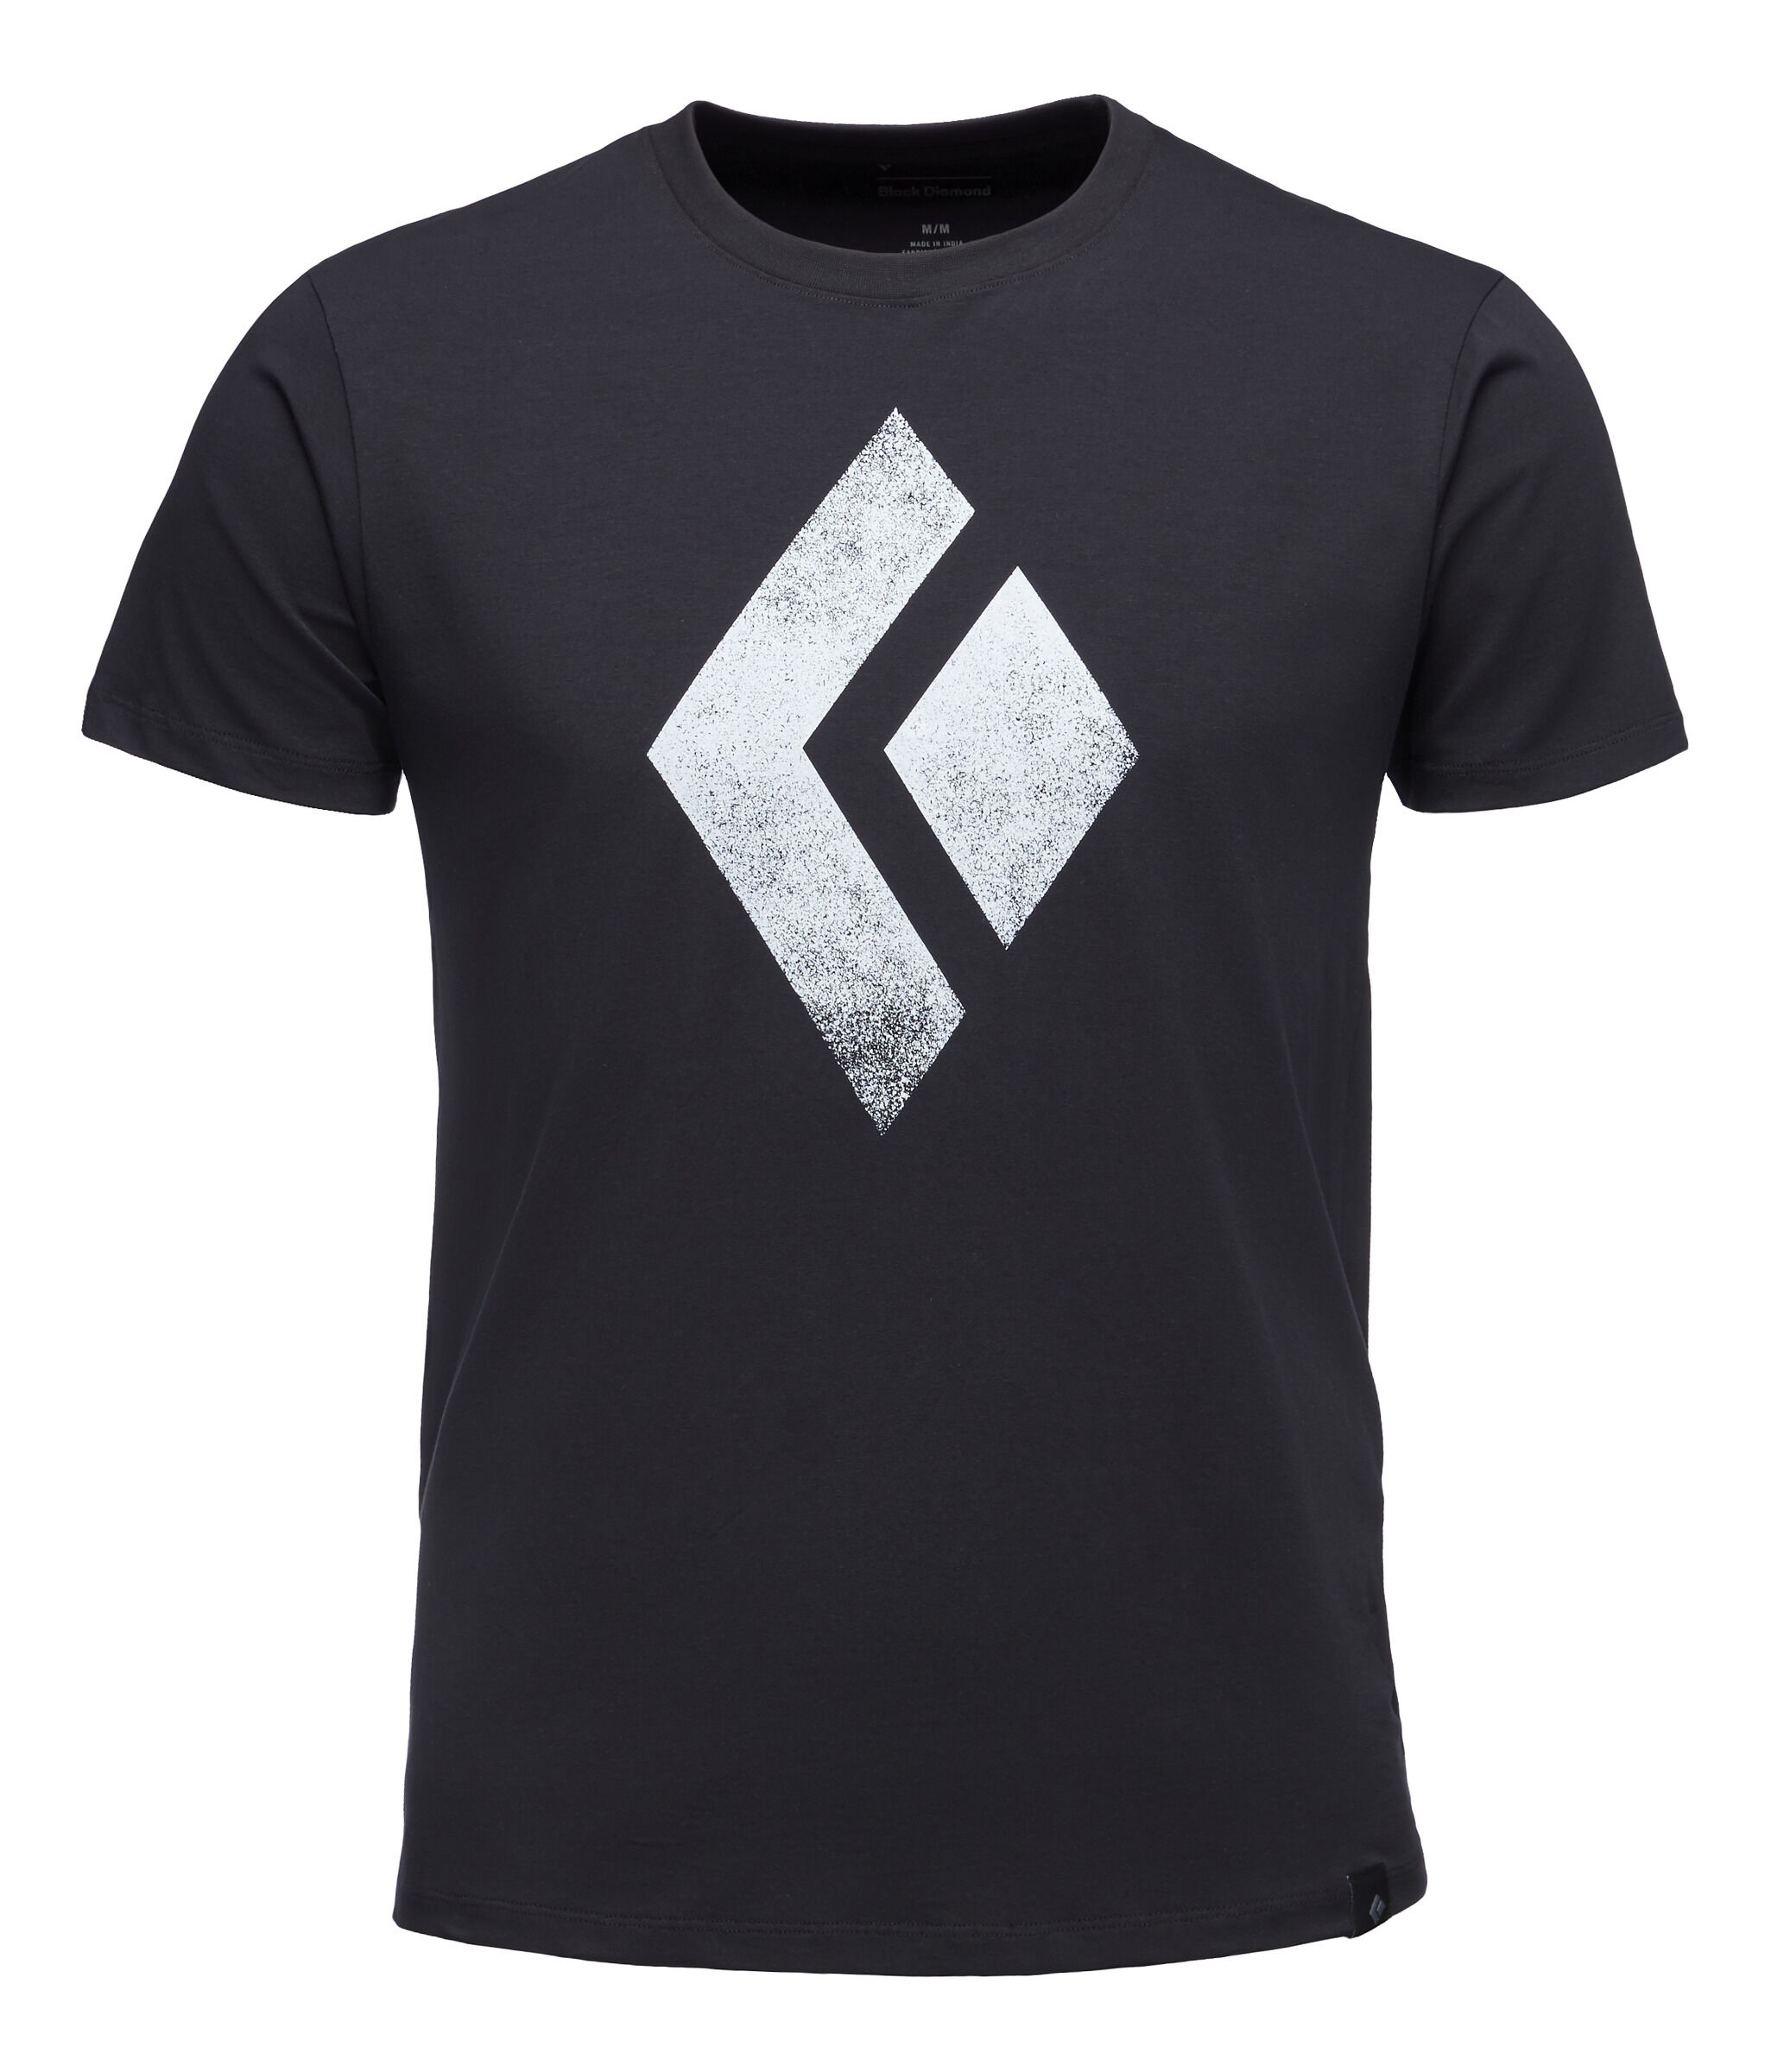 Black Diamond - Chalked Up T - T-Shirt - Men's